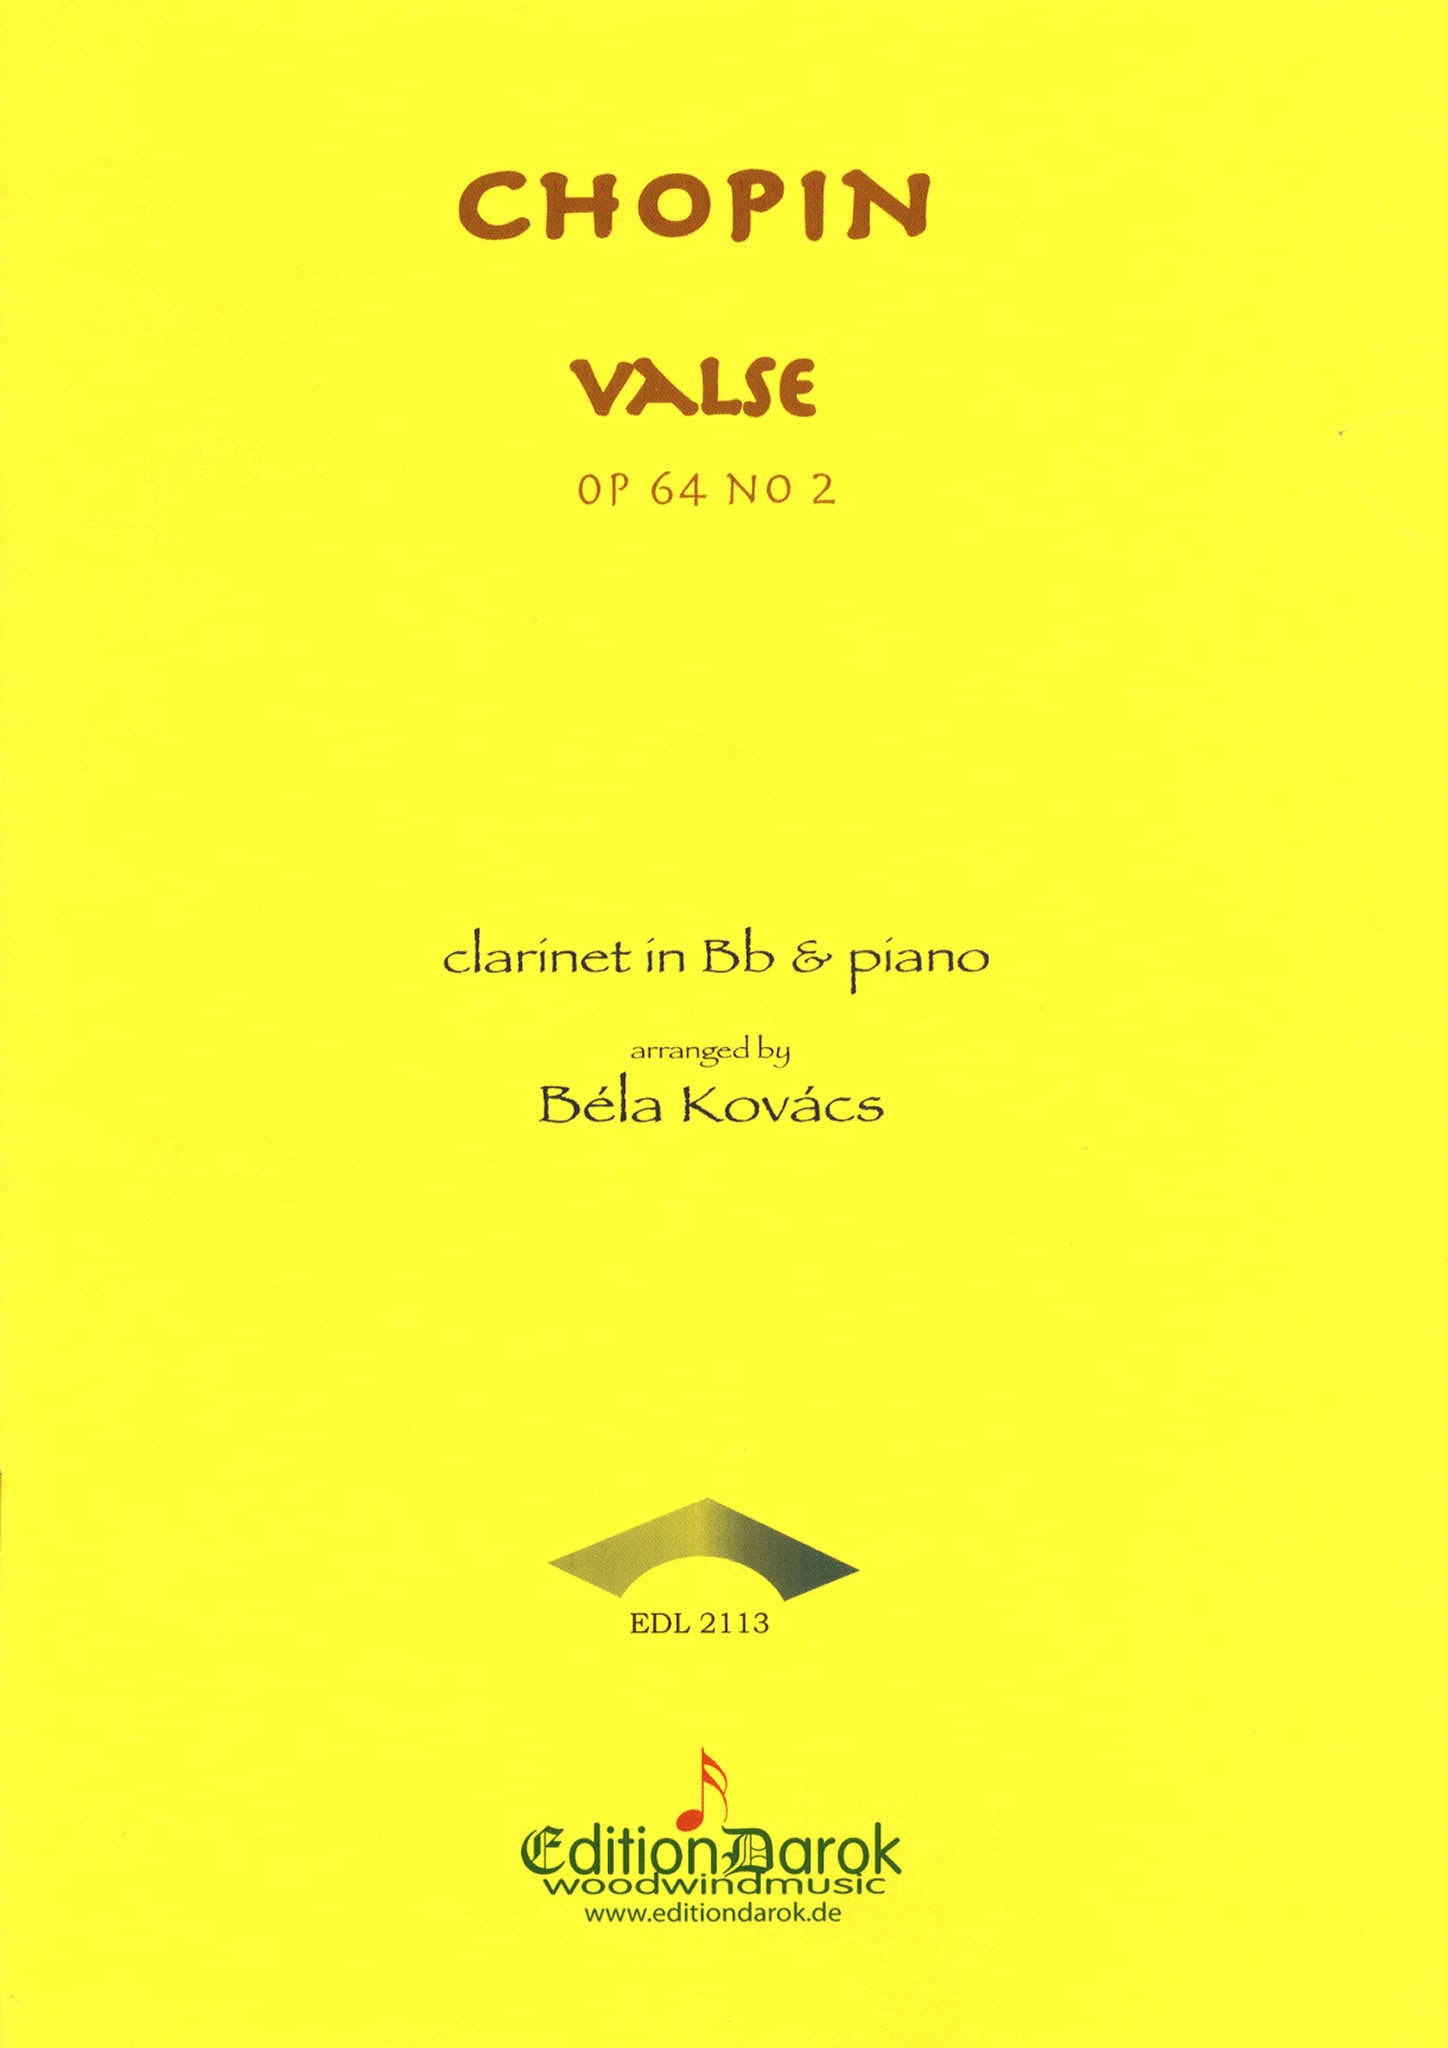 Chopin Waltz Op. 64 No. 2 Clarinet & Piano arrangement Cover